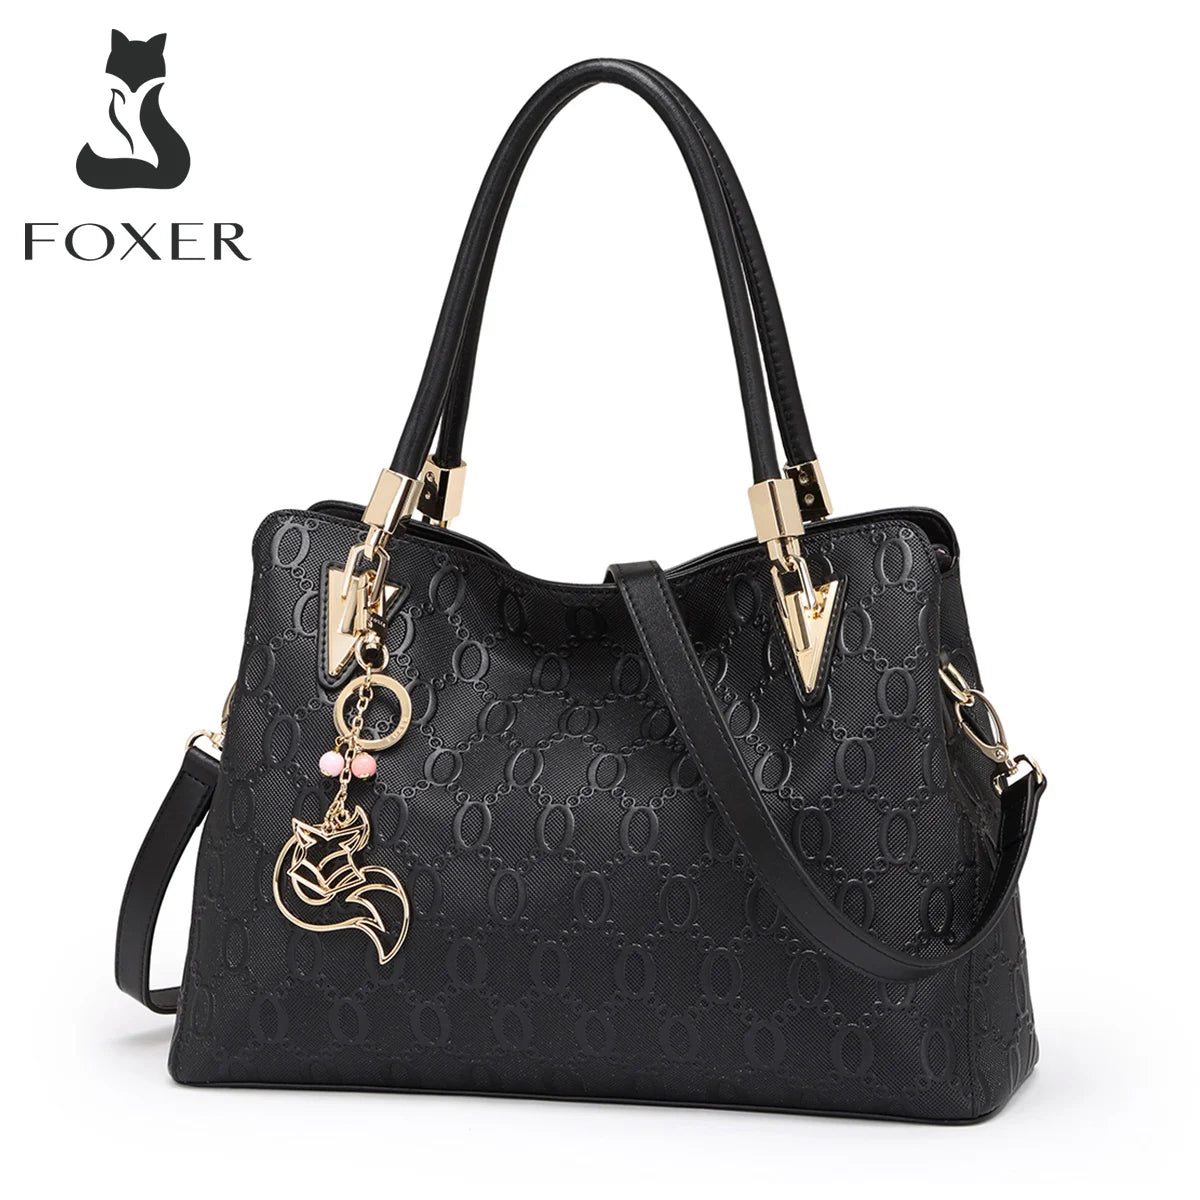 FOXER Women's Handbag Occident Style Crossbody Bag black 962061F1A